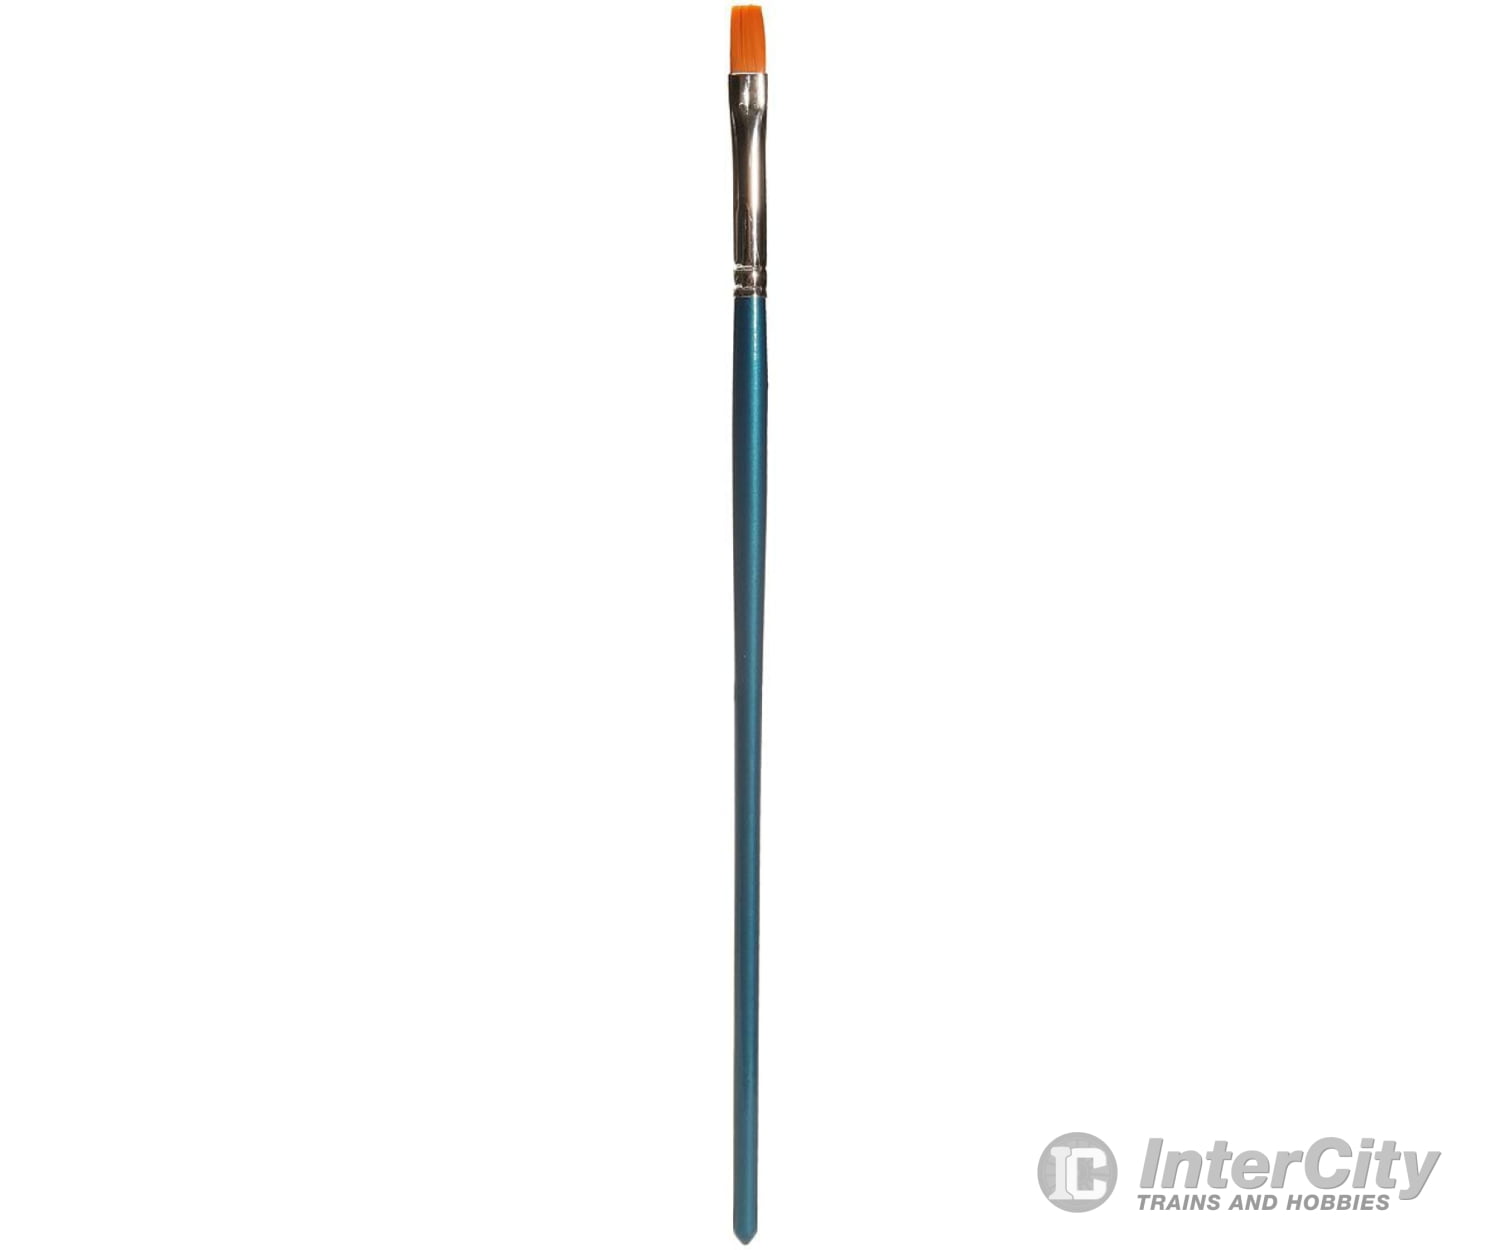 Faller 172126 Ho Tt N Z Flat Brush Synthetic Size 4 Tools